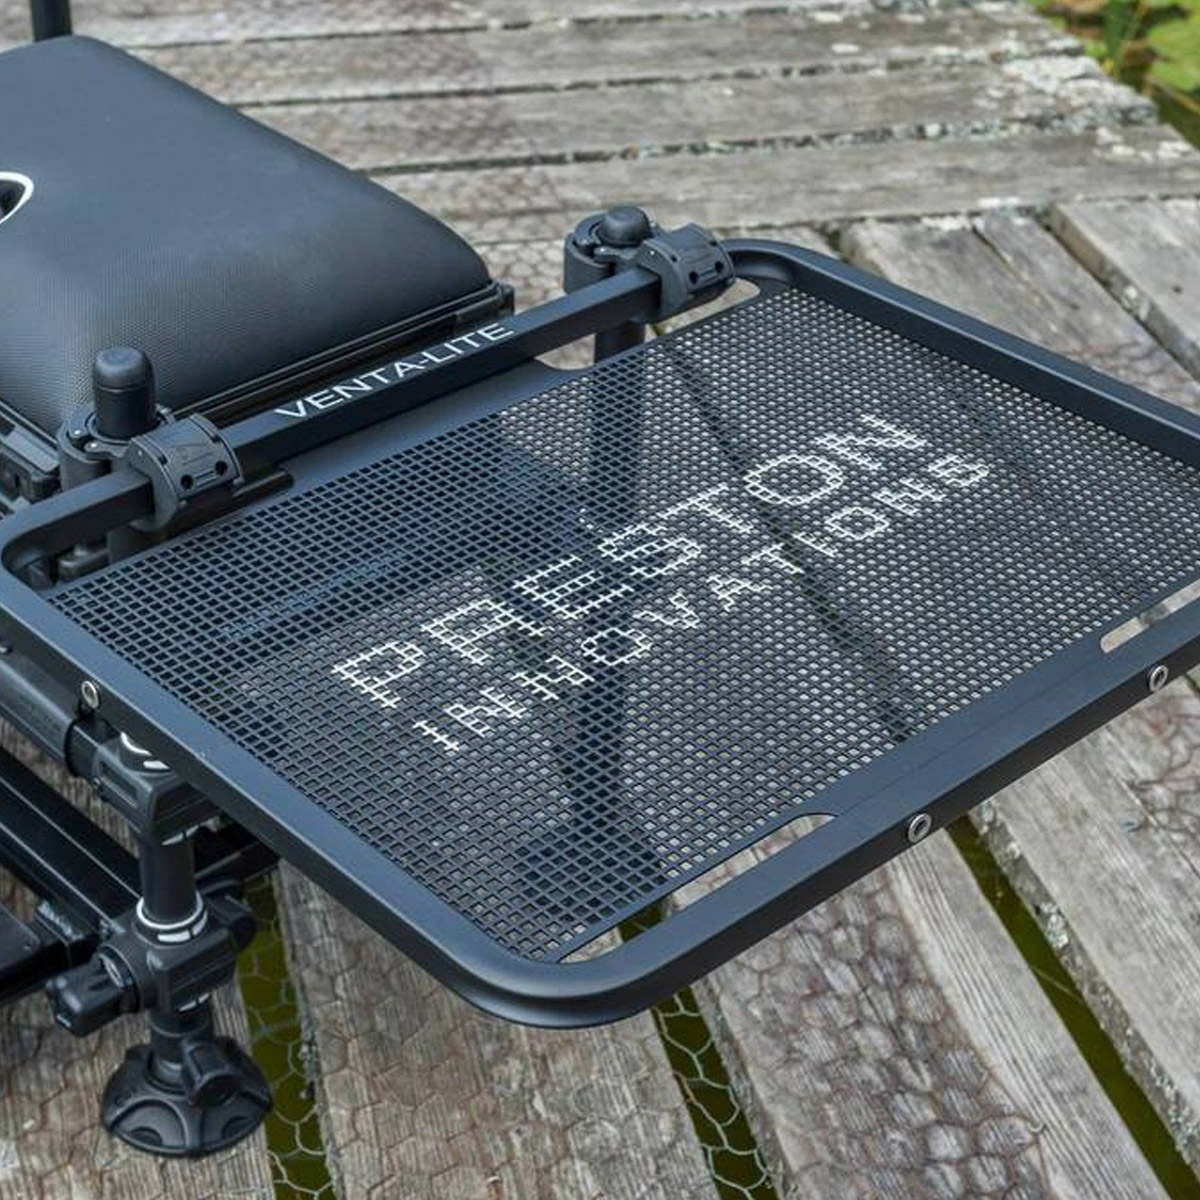 Preston Offbox 36 Venta-Lite Side Tray Large